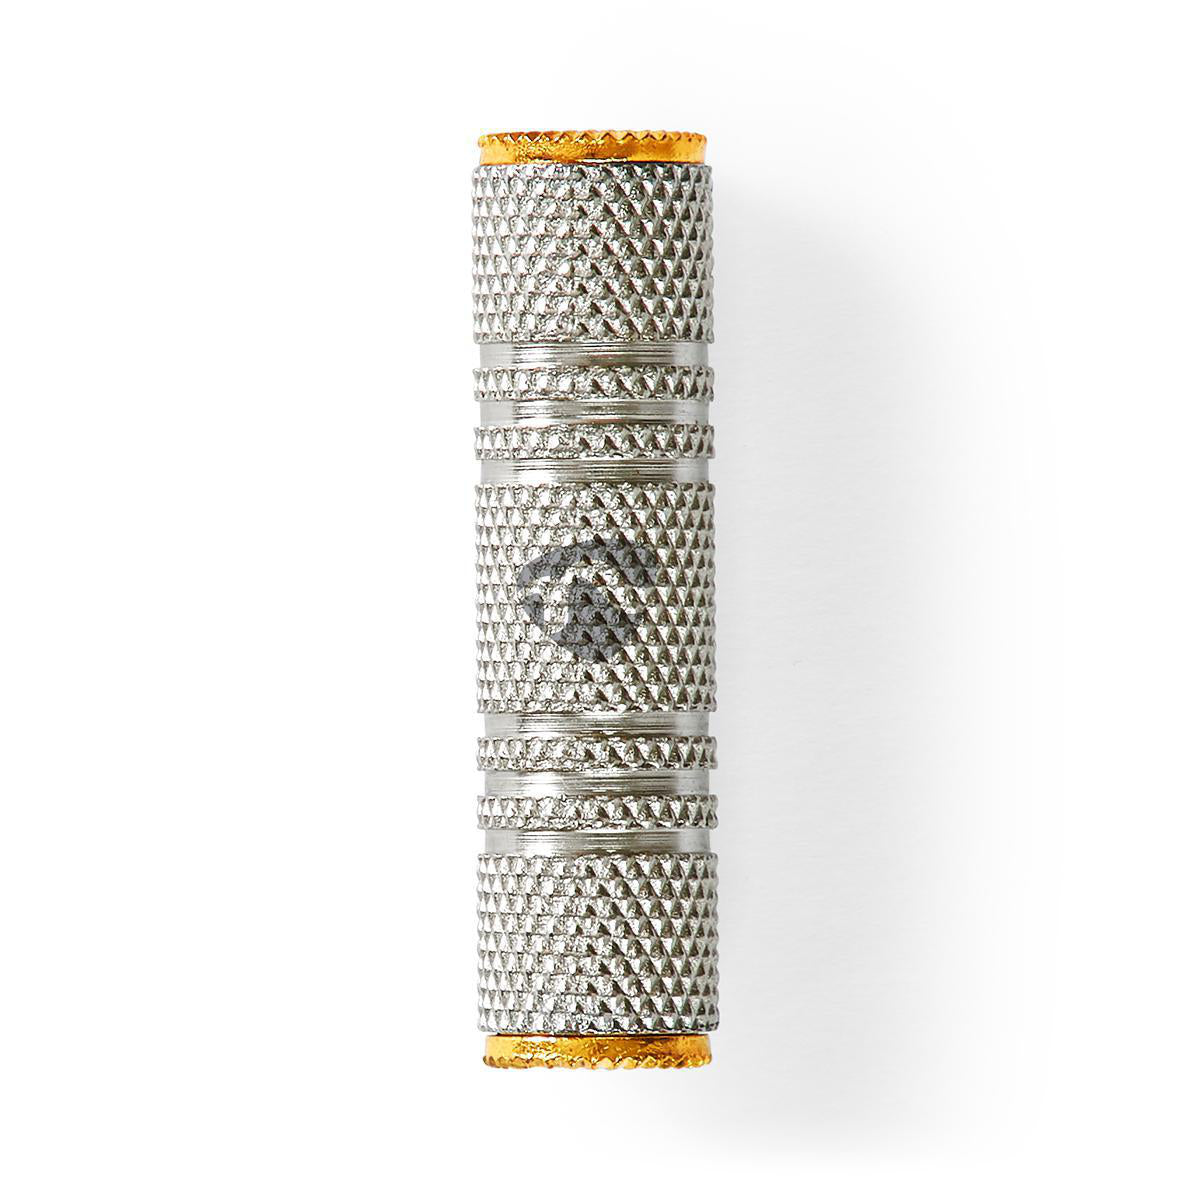 Stereo-Audio-Adapter | 3.5 mm Buchse | 3.5 mm Buchse | Vergoldet | Gerade | Aluminium | Gold / Metall | 1 Stück | Verpackung mit Sichtfenster